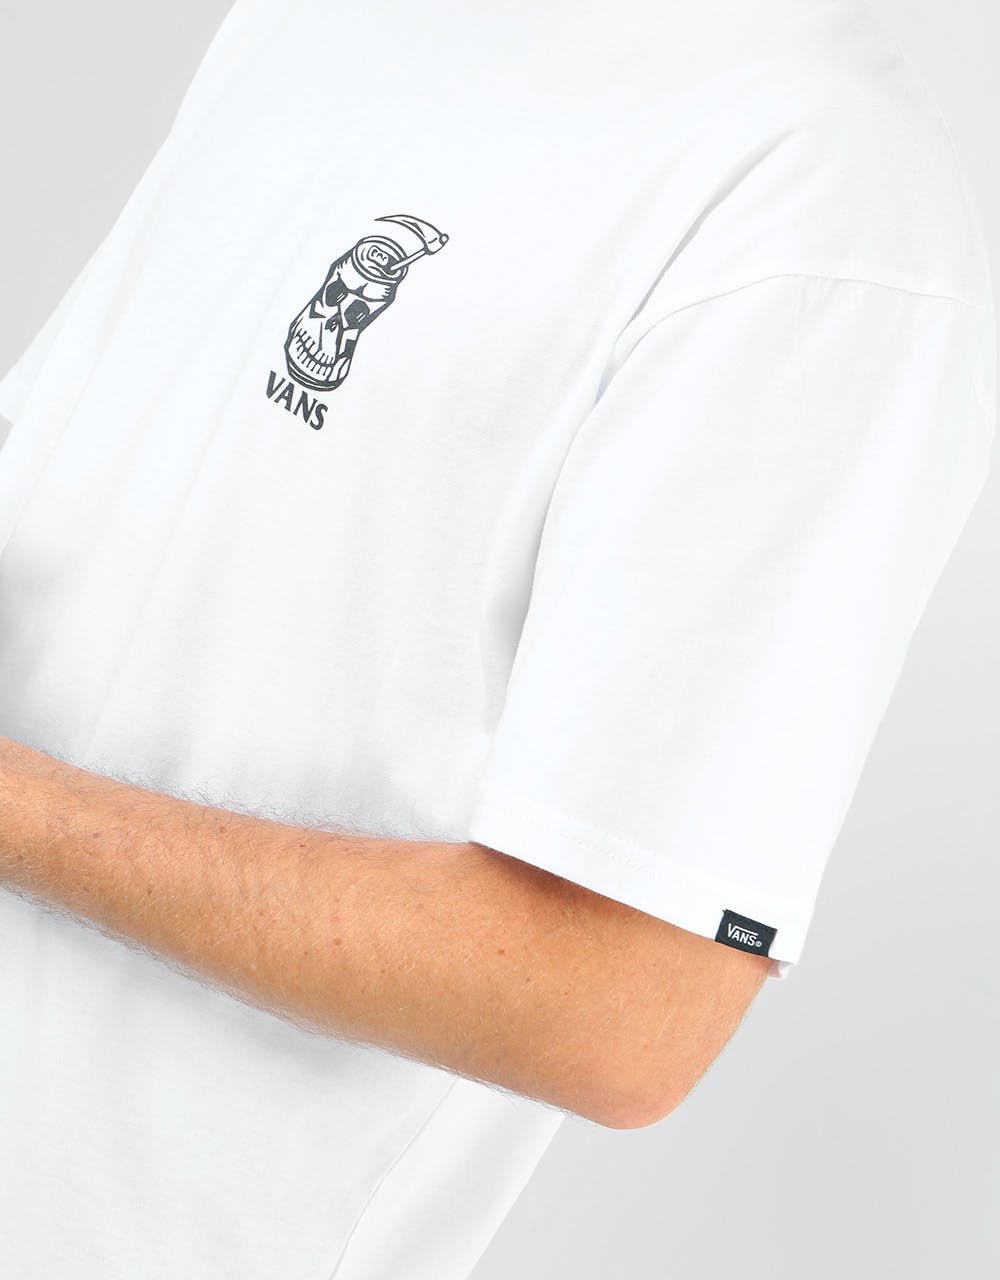 Vans Moonshine T-Shirt - White